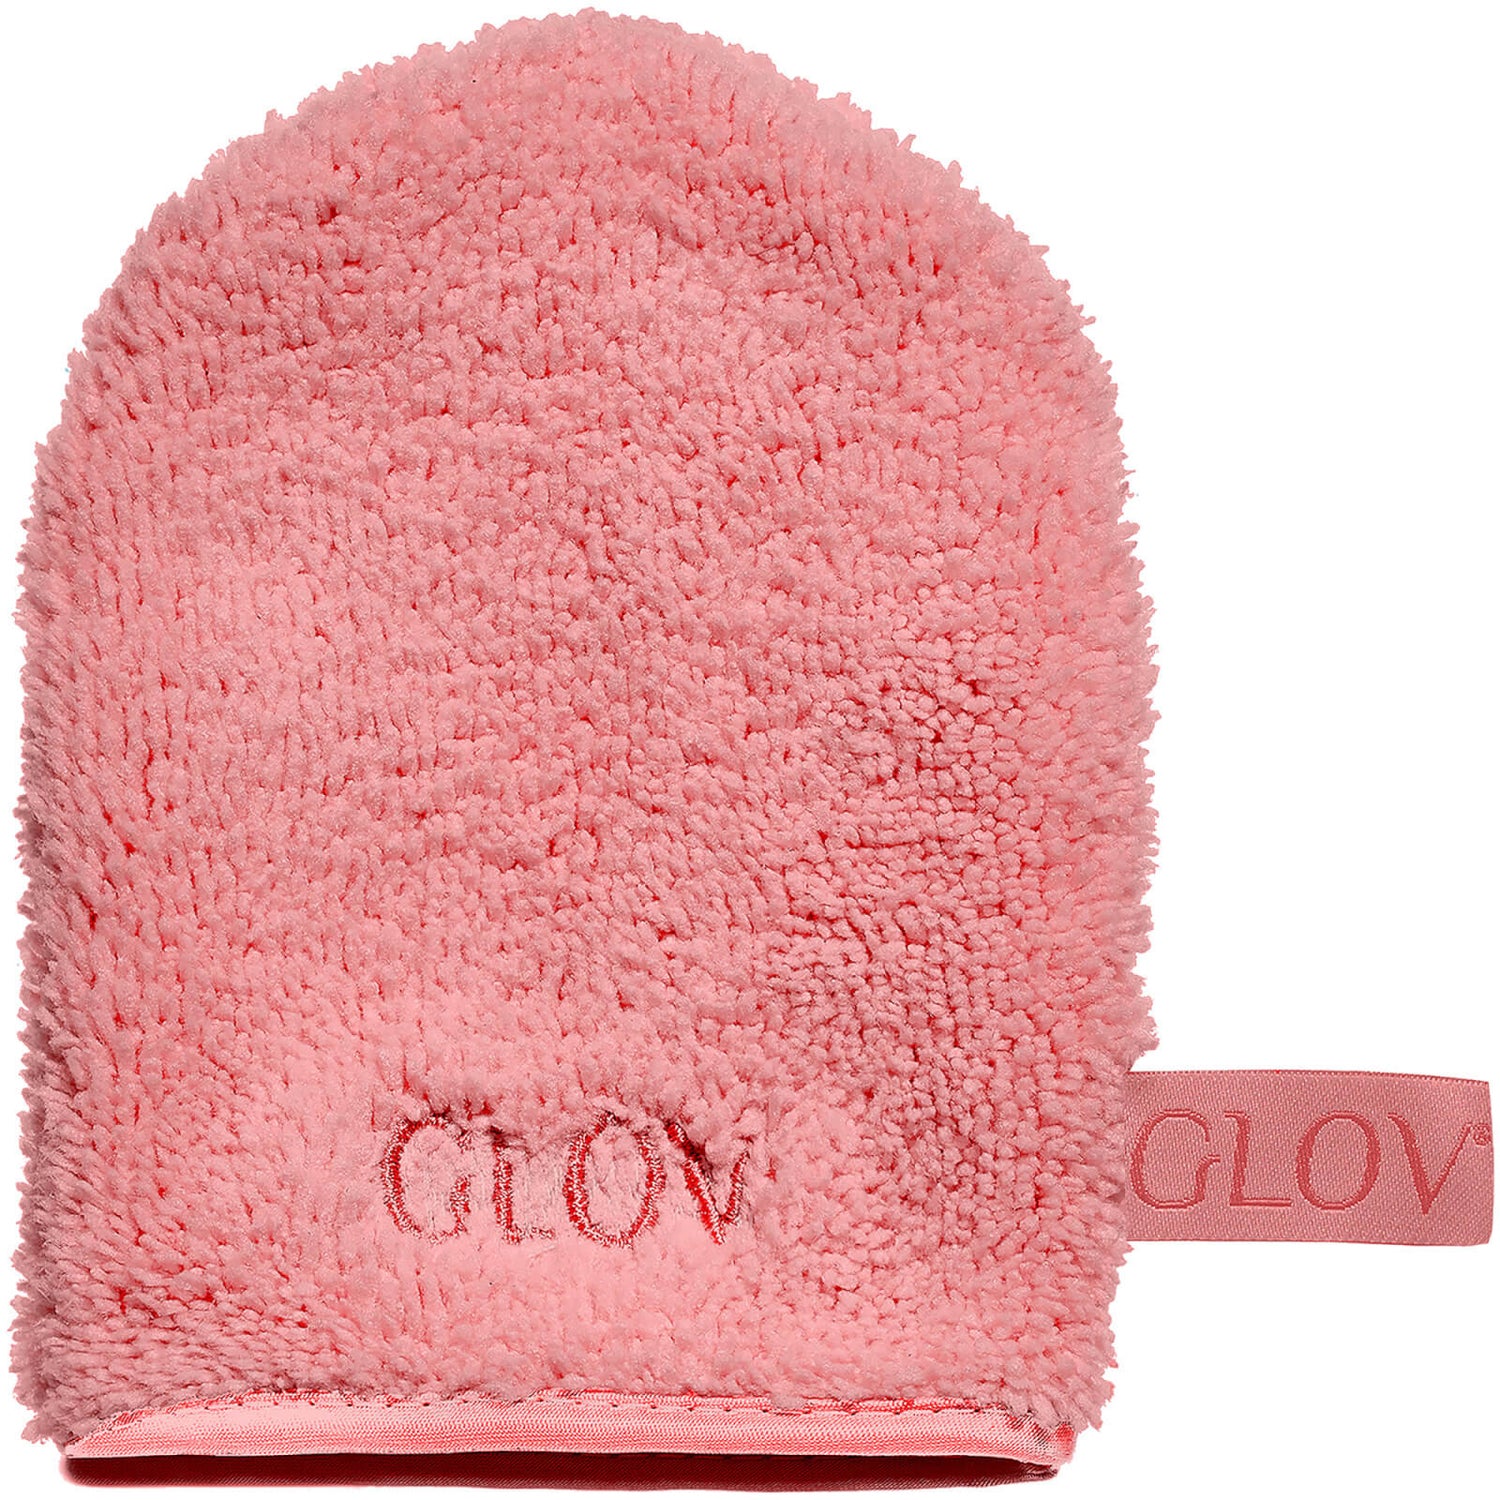 GLOV® 輕巧潔面手套 - 淘氣蜜桃